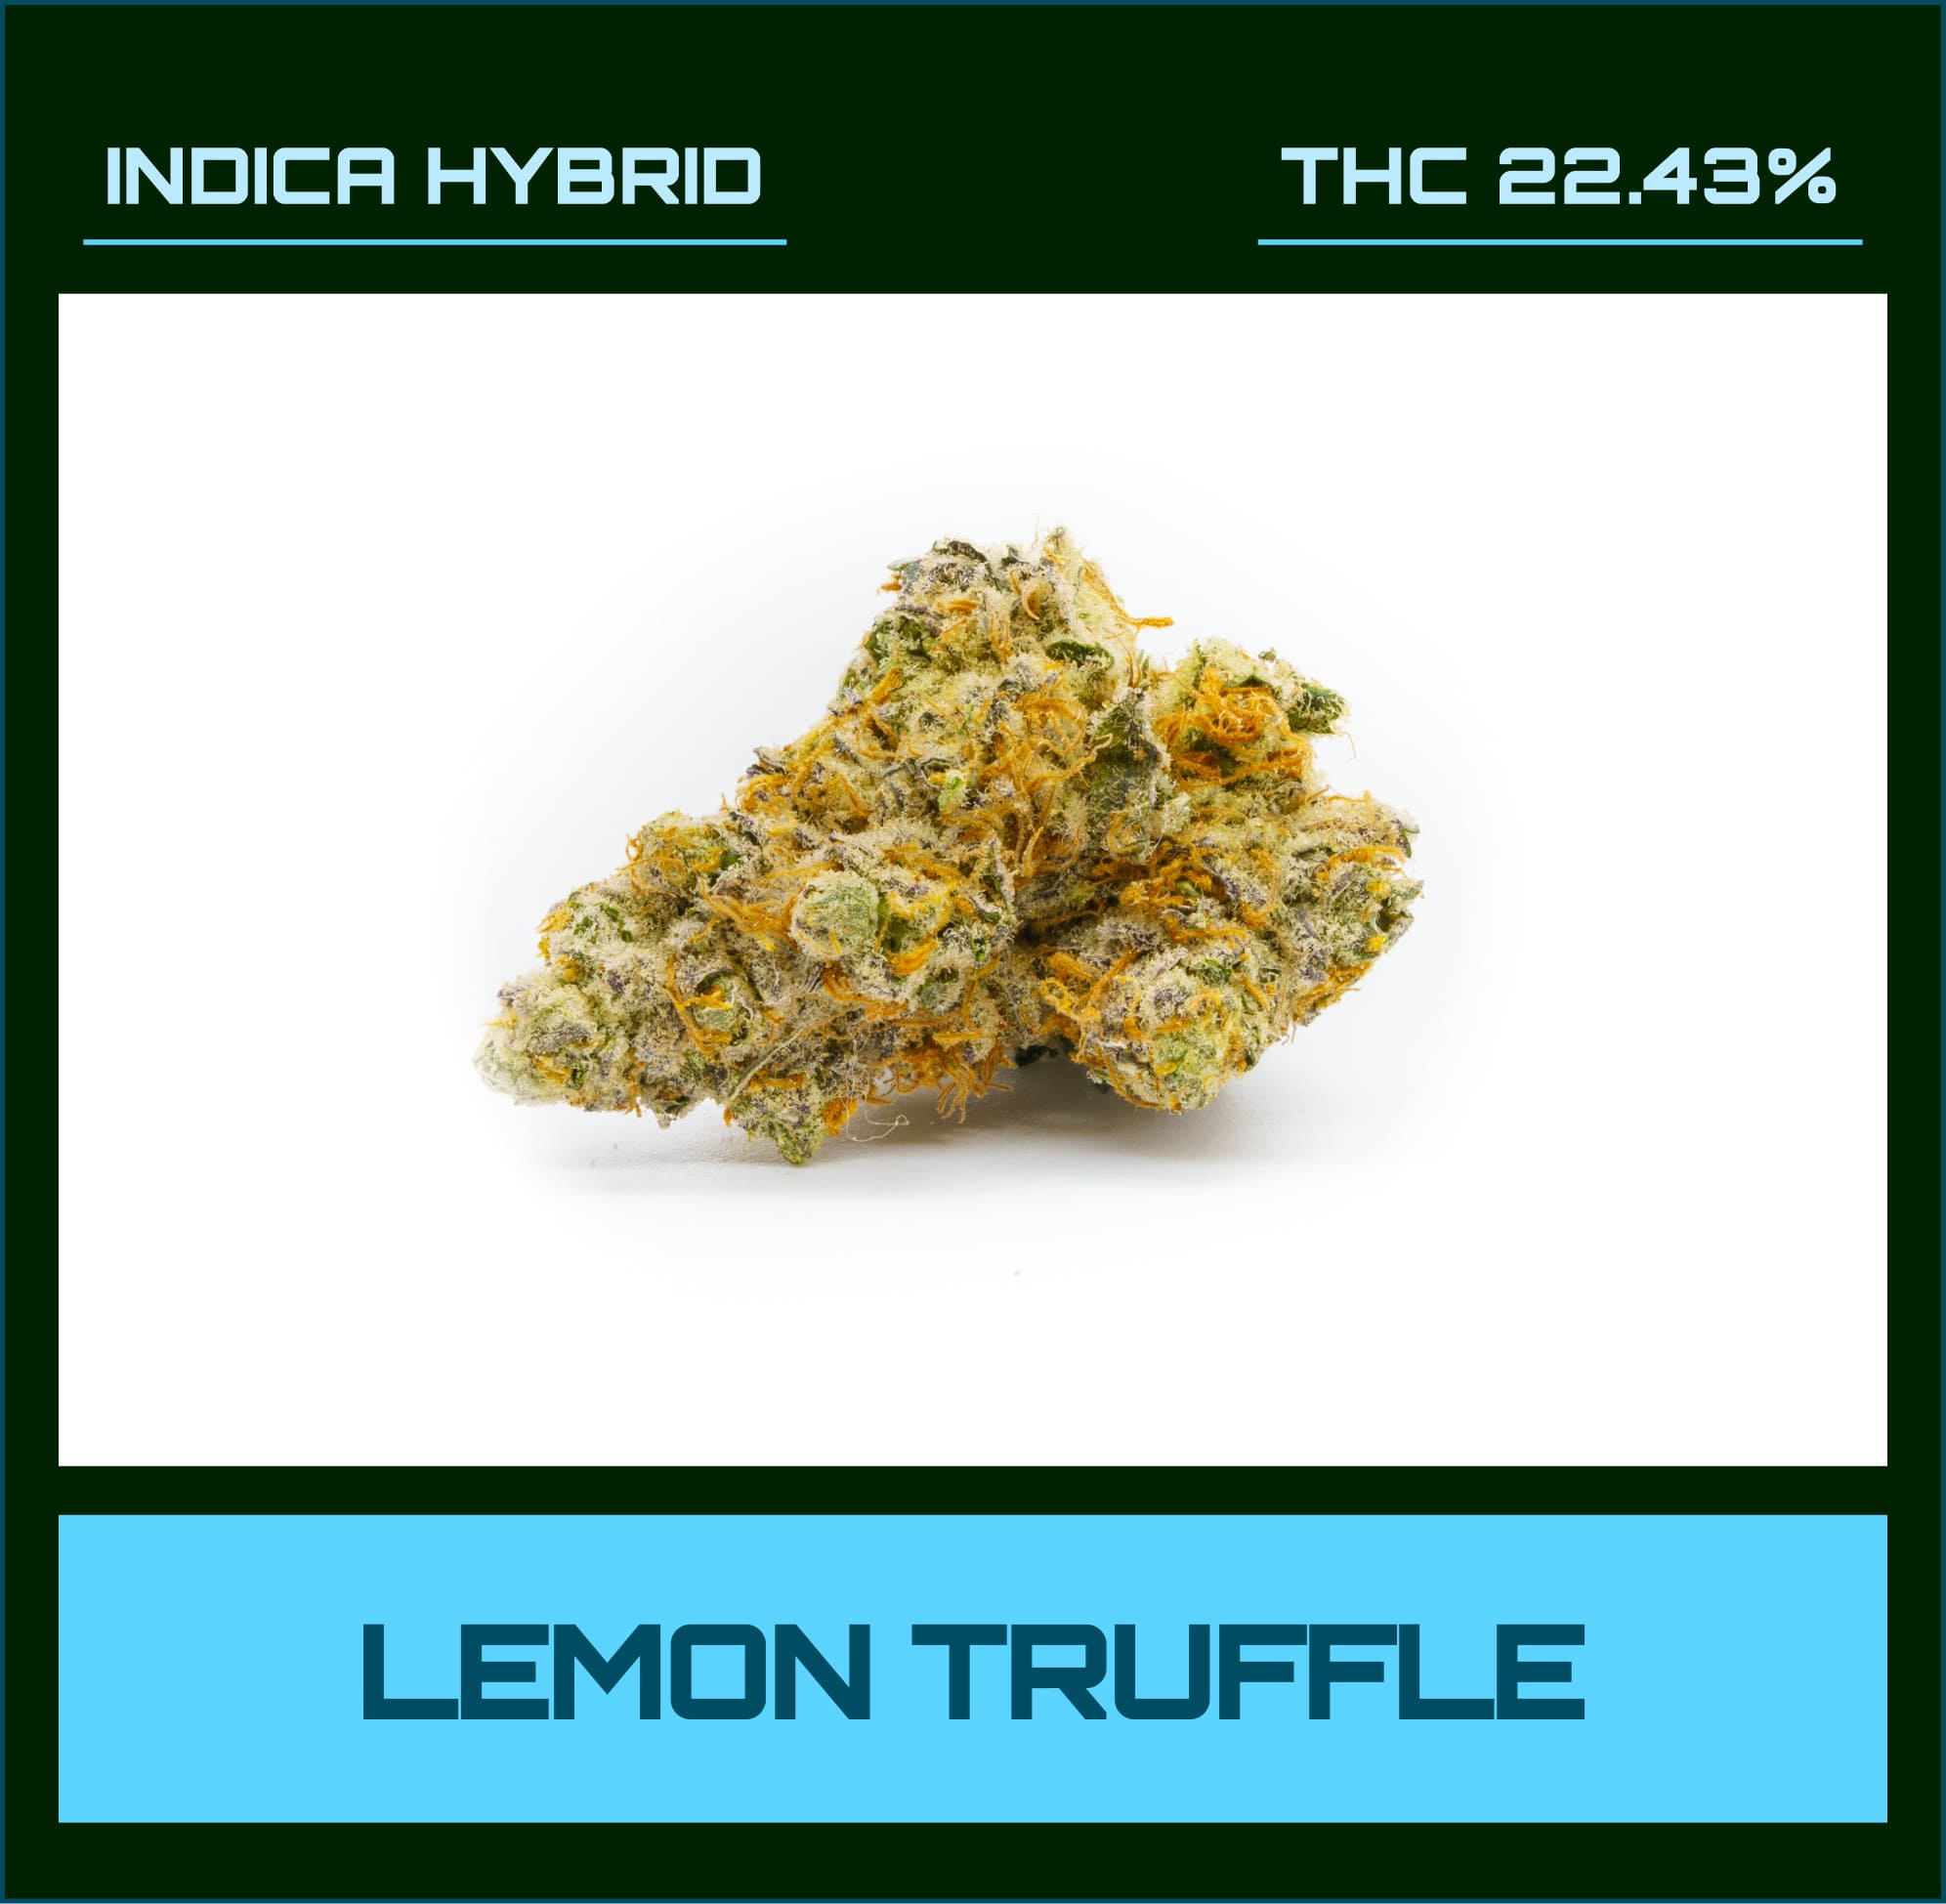 Lemon Truffle